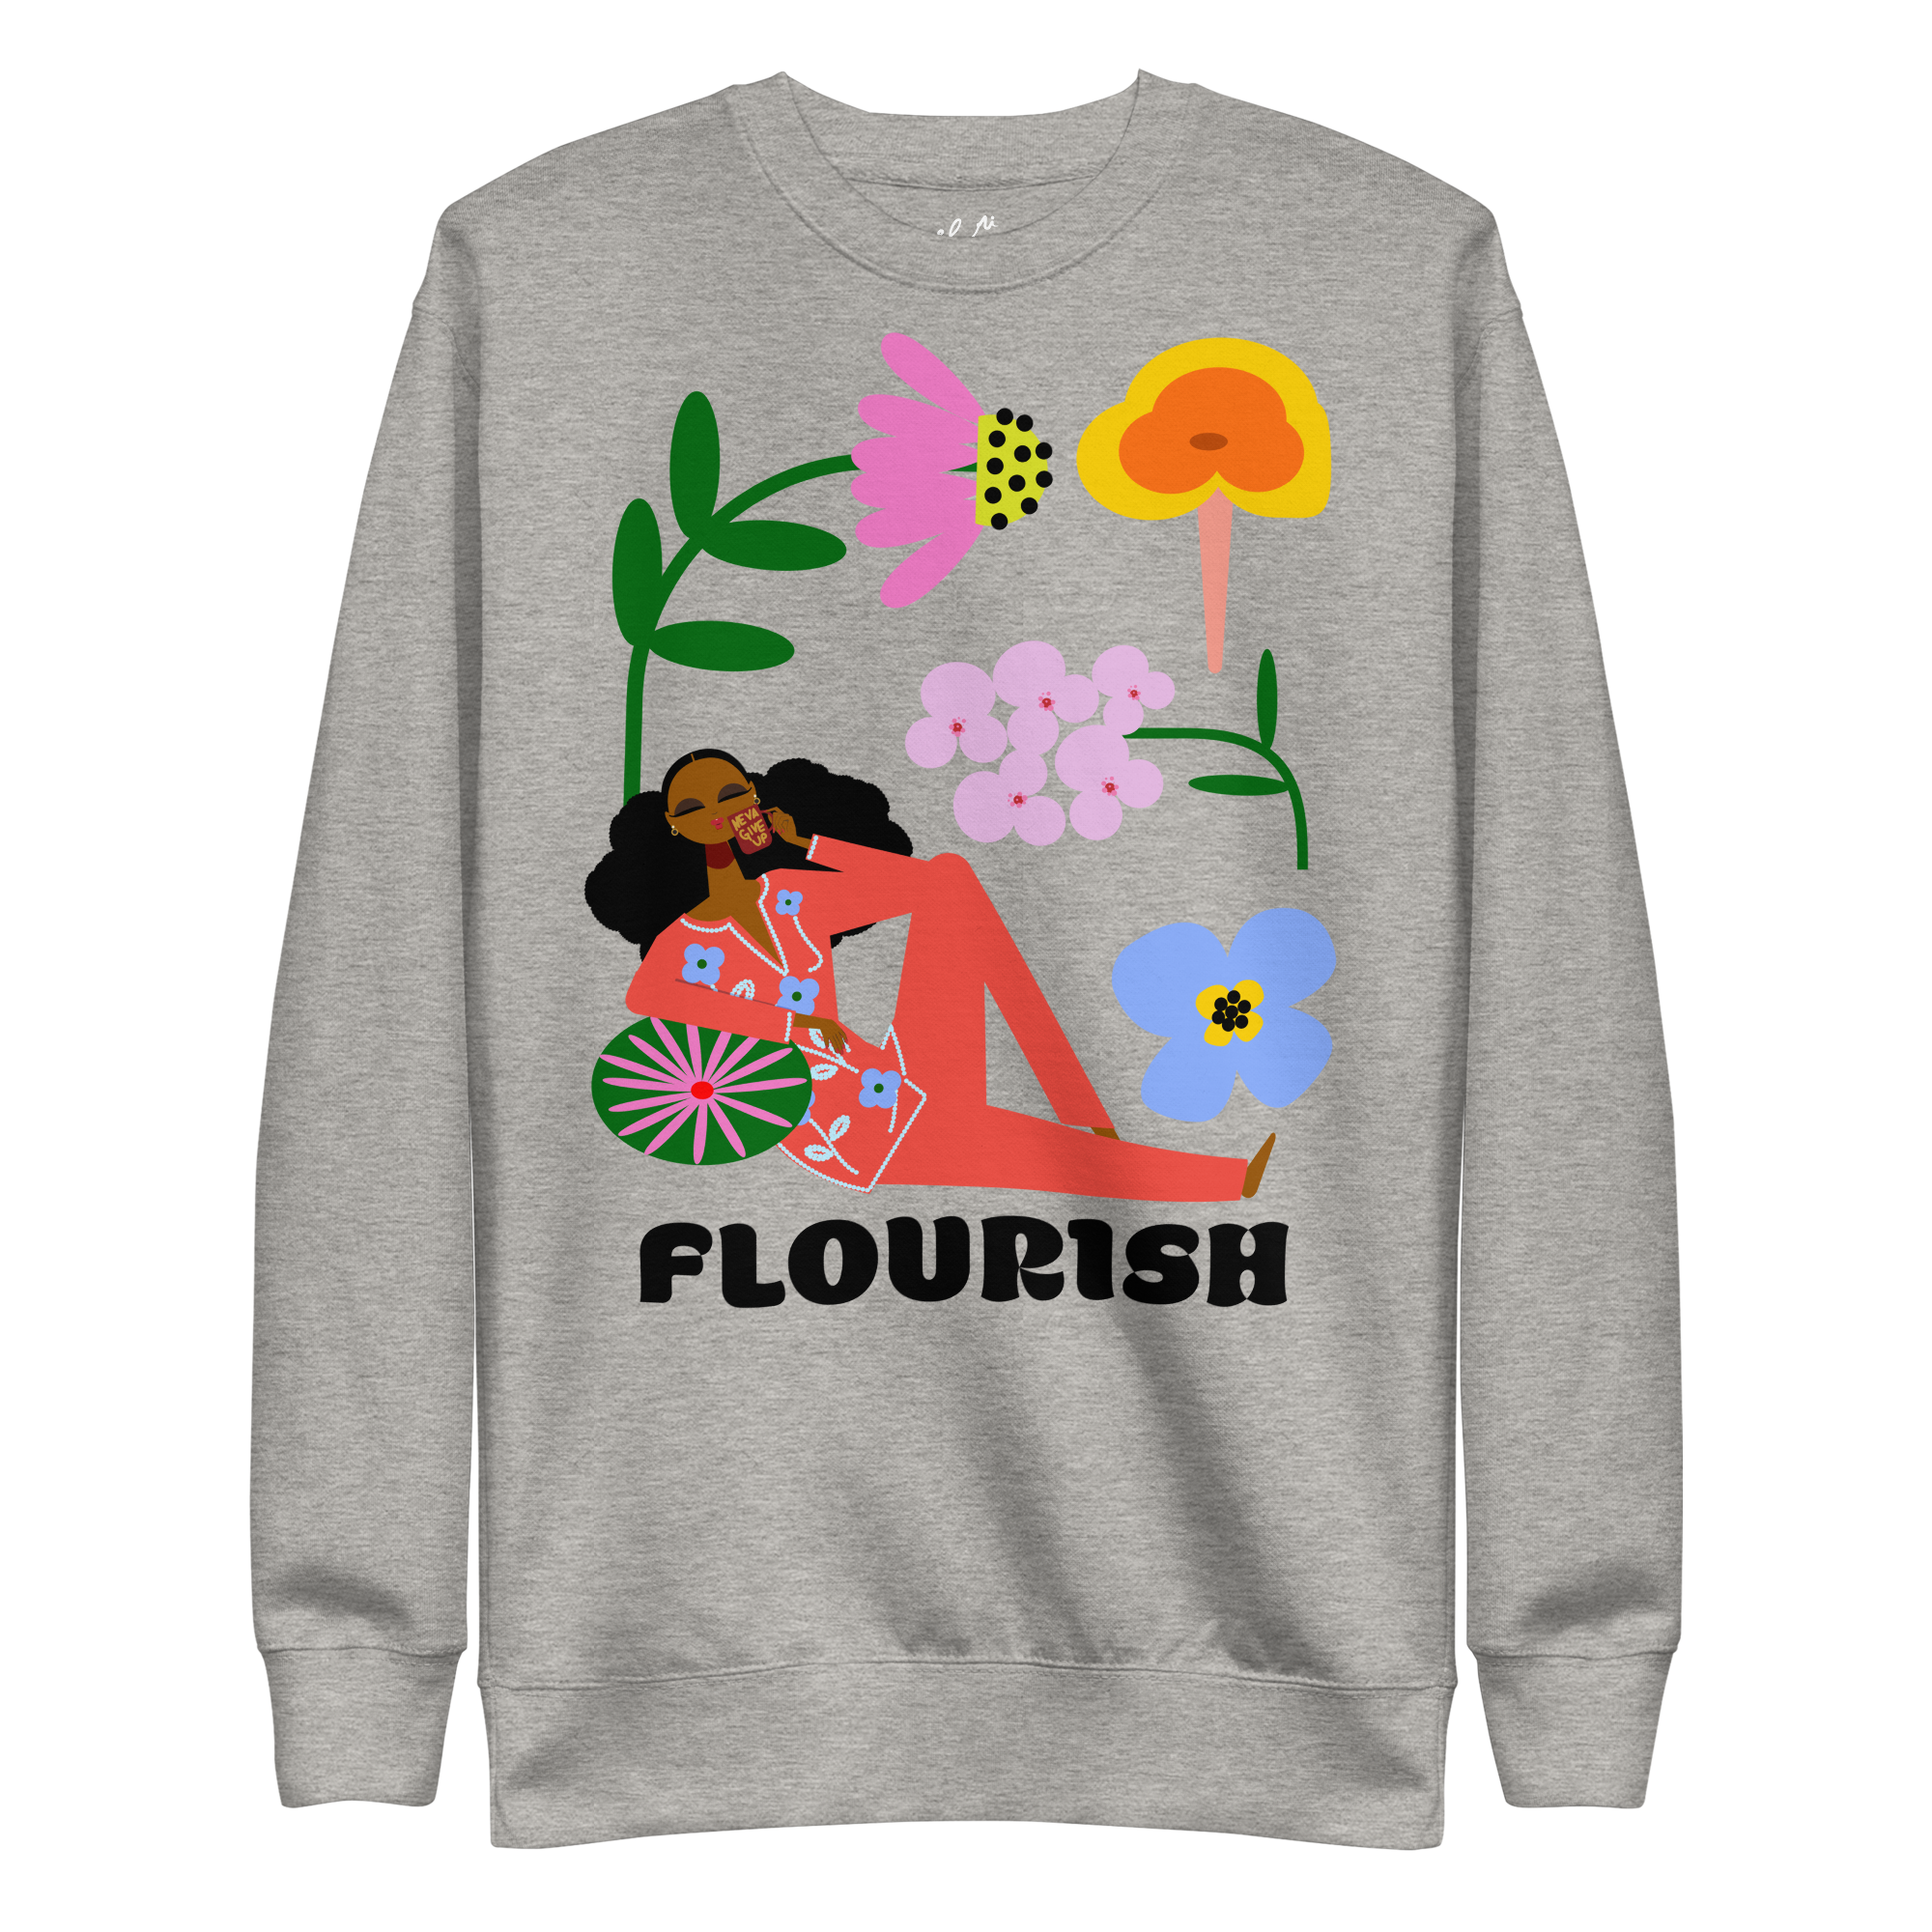 Flourish Sweatshirt